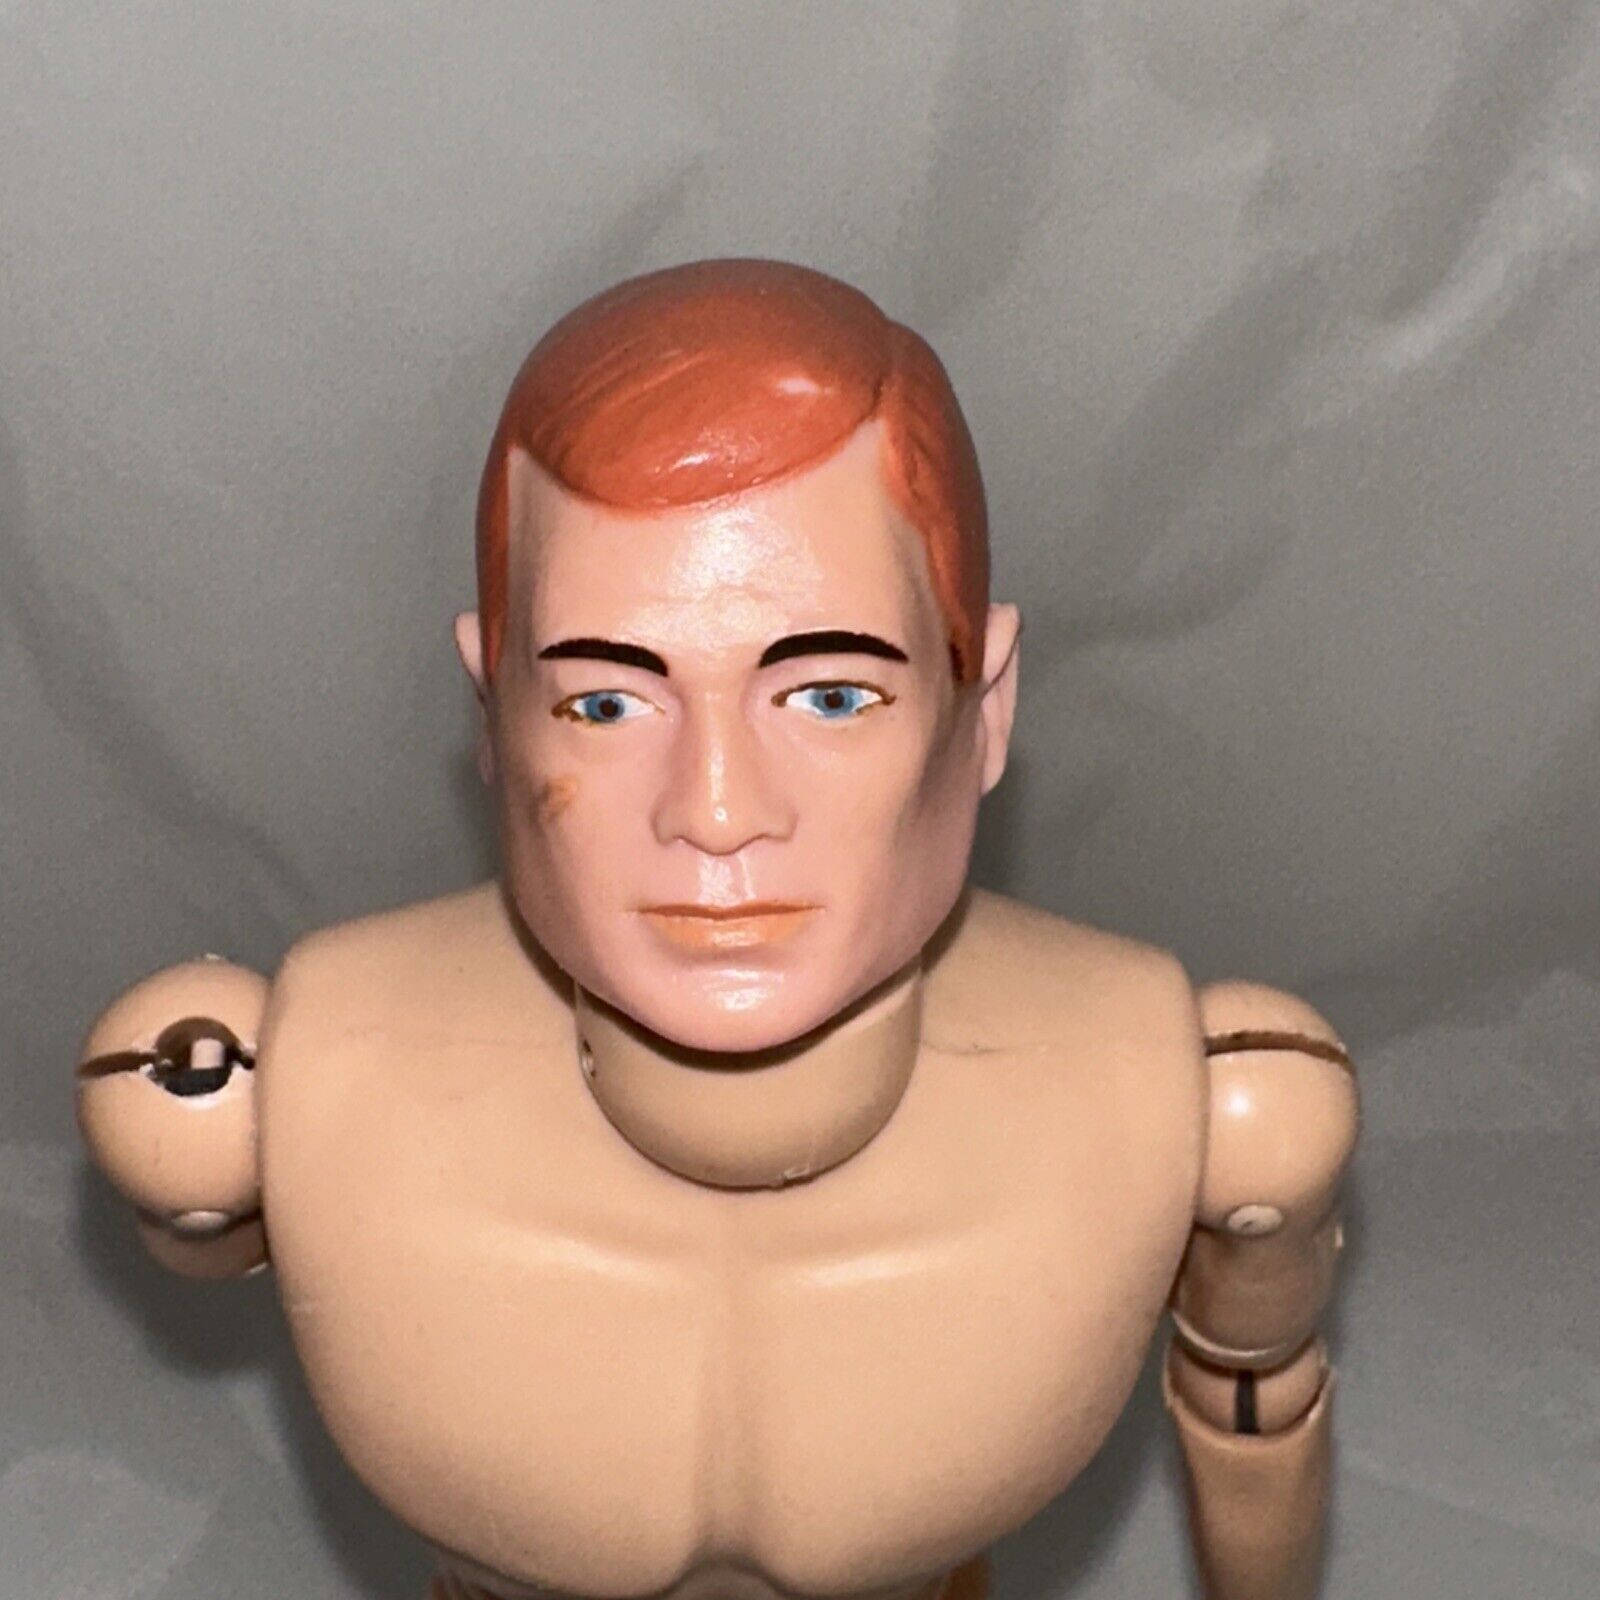 Vtg 1964 GI Joe Red Hair Nude TM Figure - Early Issue Slot Shoulder!